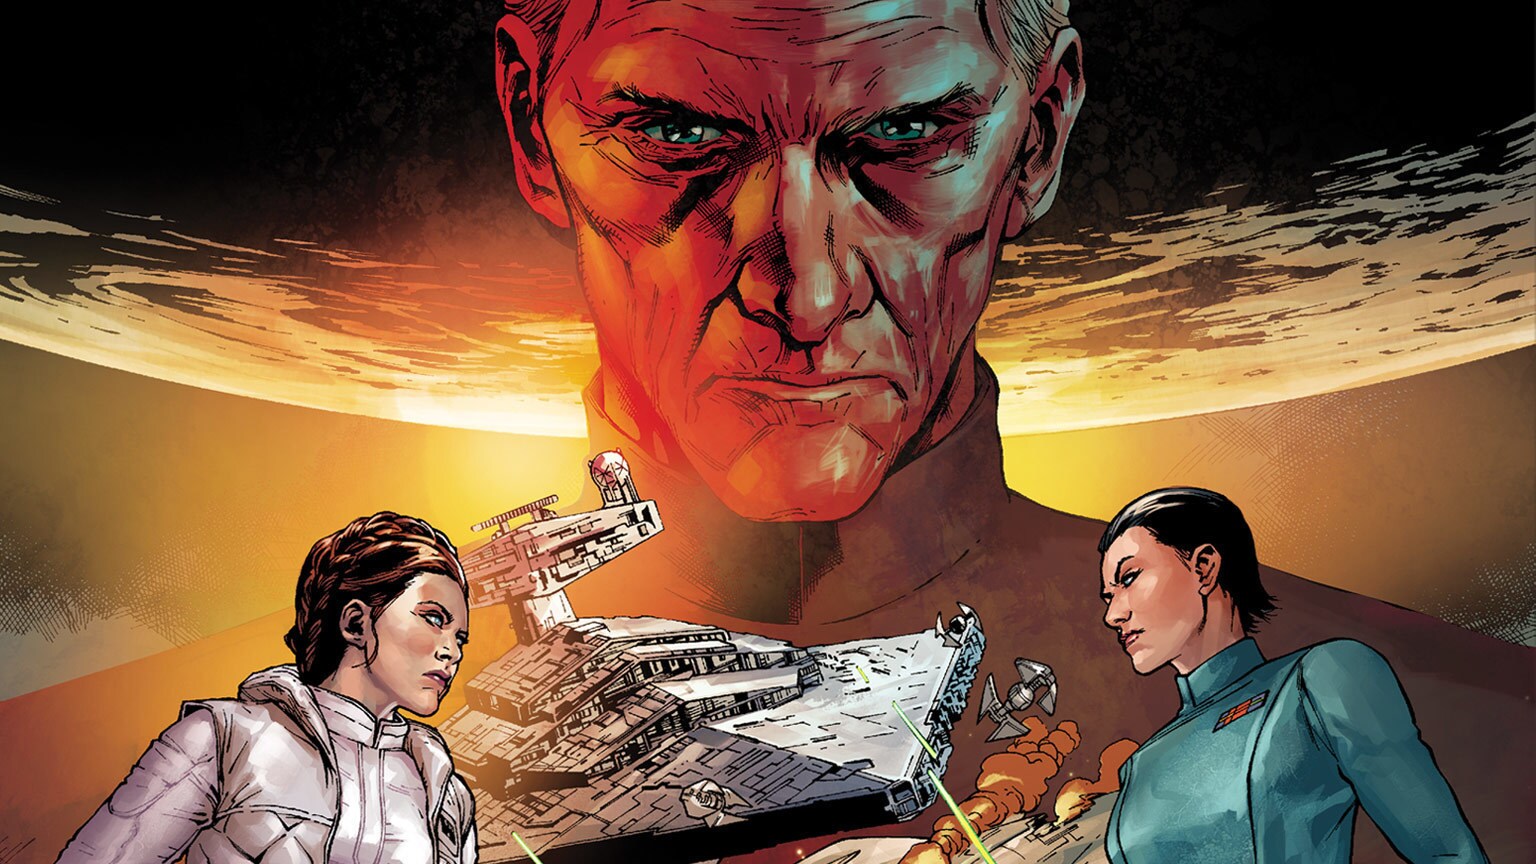 Tarkin Readies to Strike in Marvel’s Star Wars #7 - Exclusive Preview